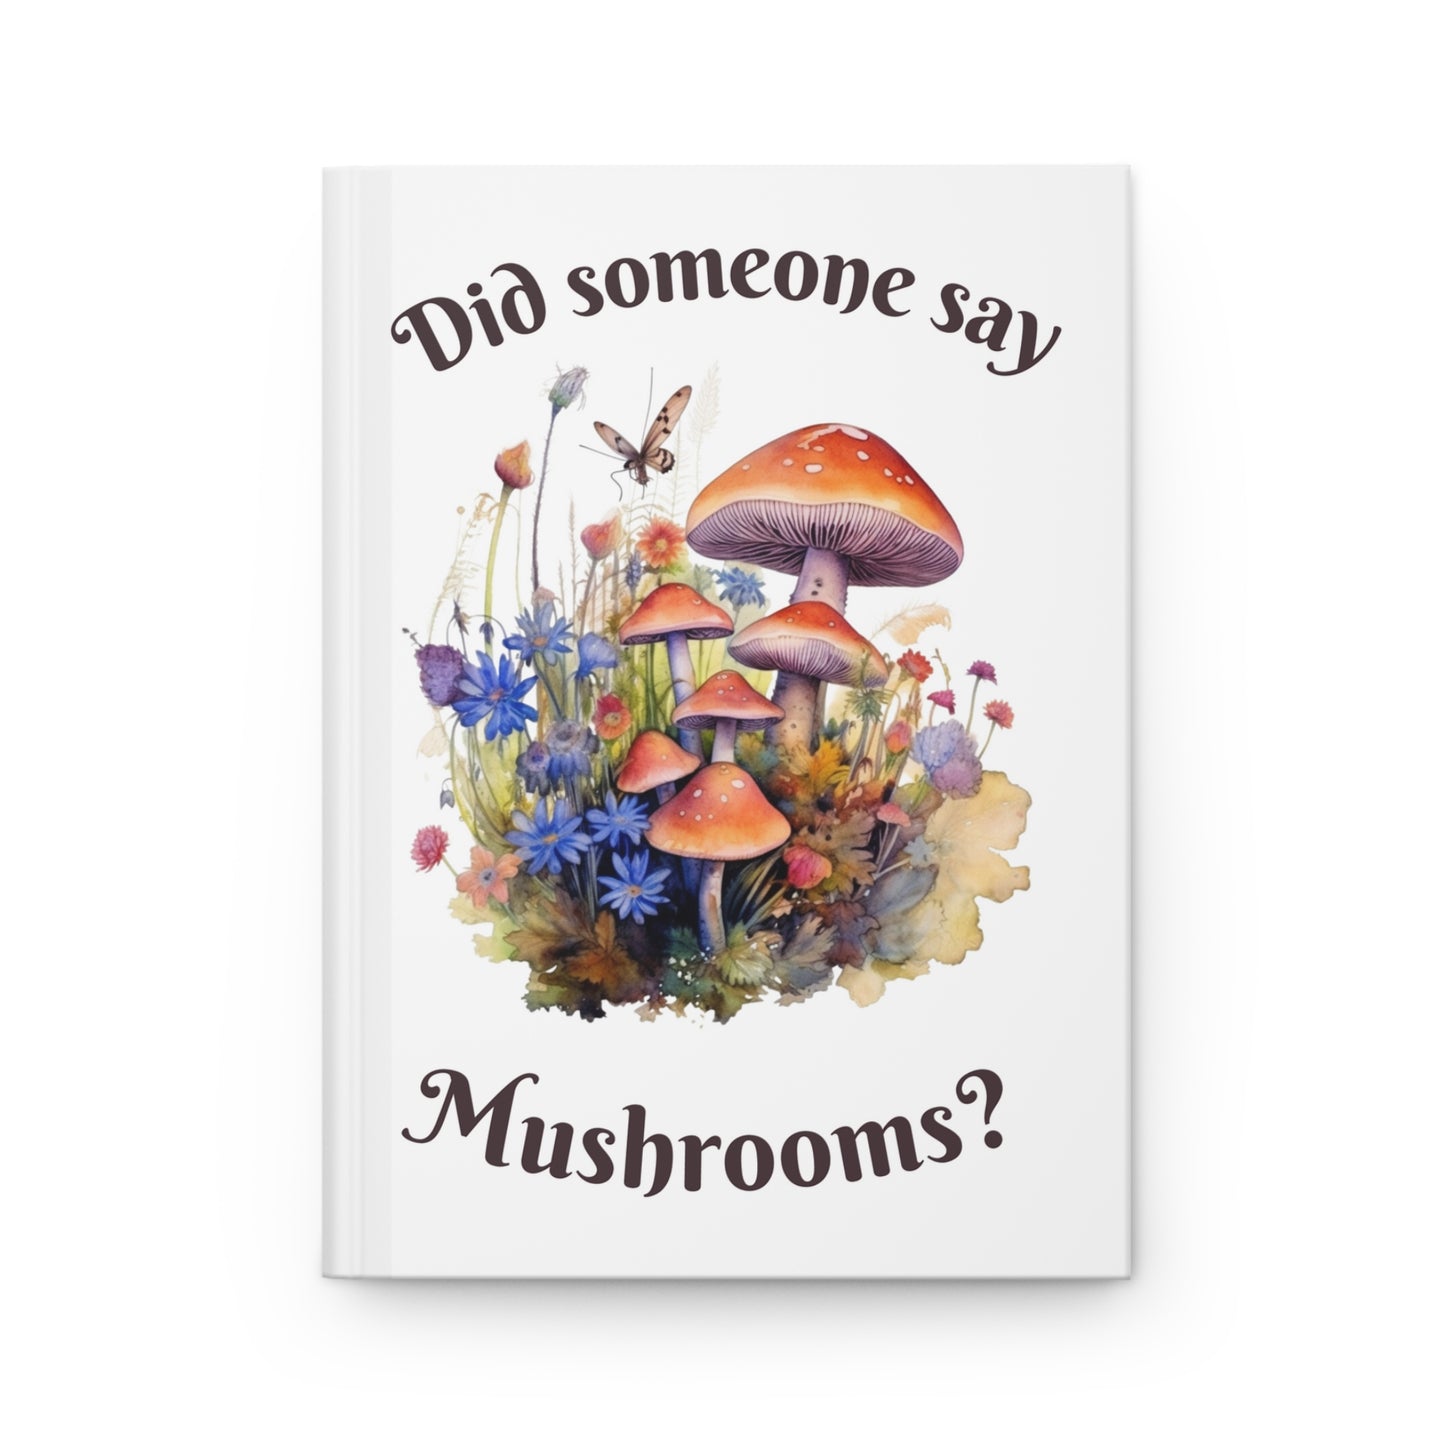 Mushroom Magic Hardcover Journal Notebook - Mindfulness, Gratitude, Daily Self-Care, Wellness Diary, Size 5.75"x7.5"